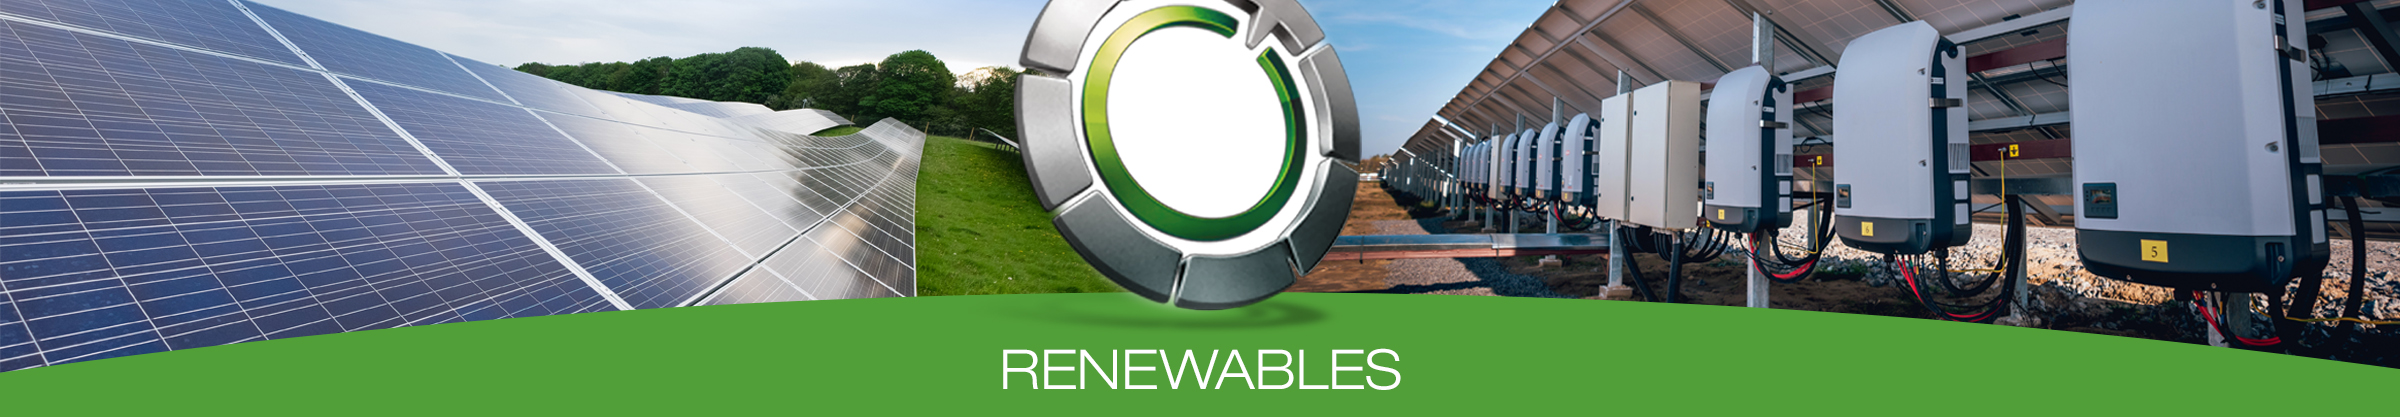 Stator Renewables